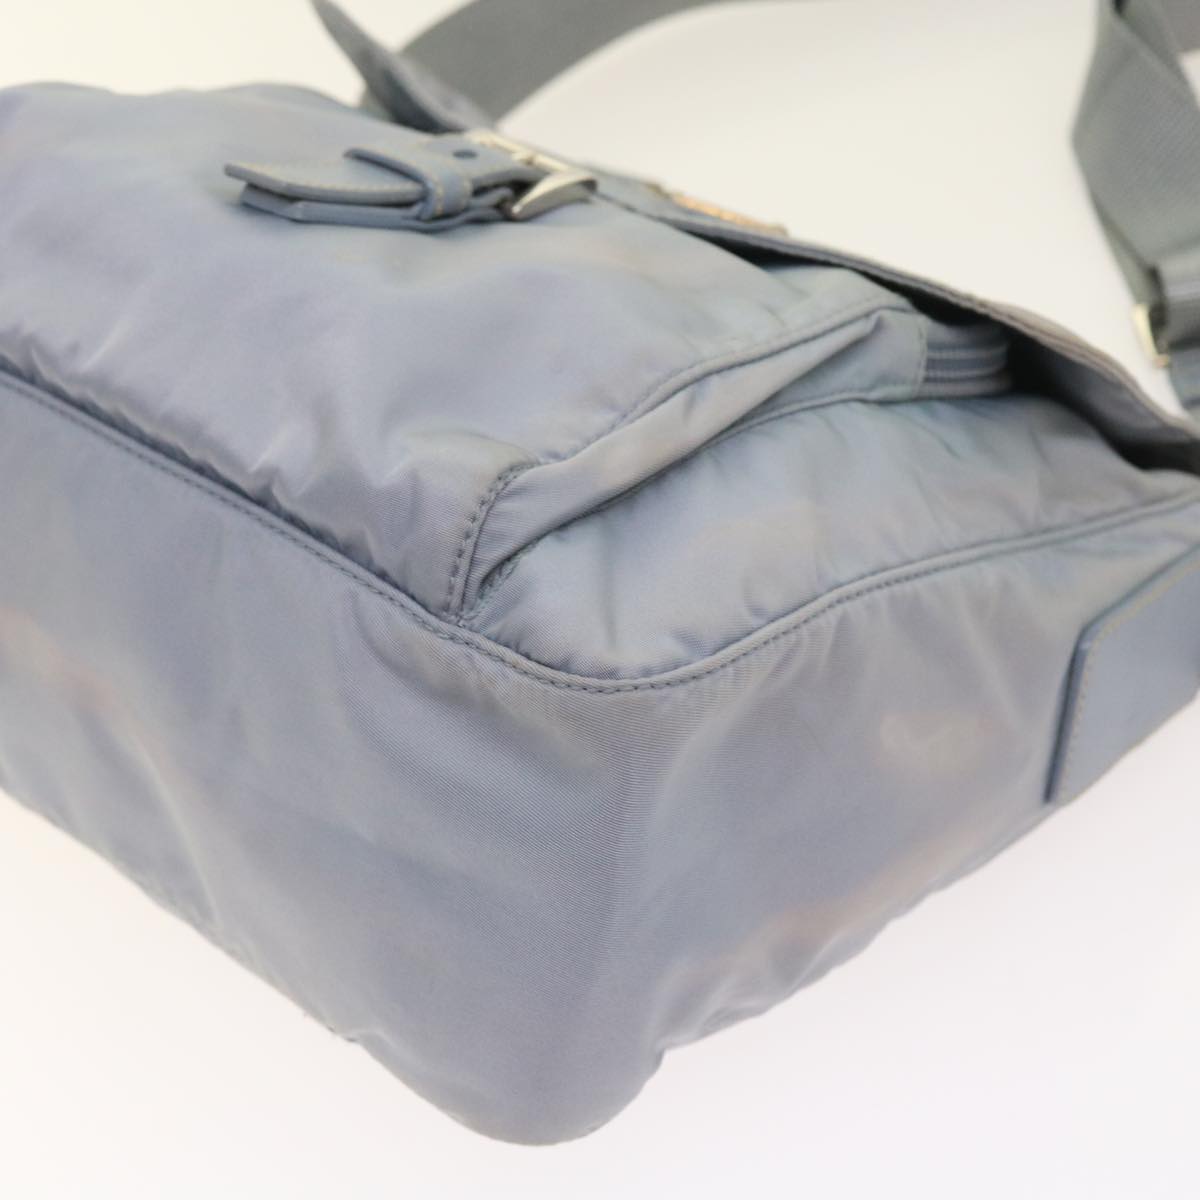 PRADA Shoulder Bag Nylon Leather Light Blue Auth 54345